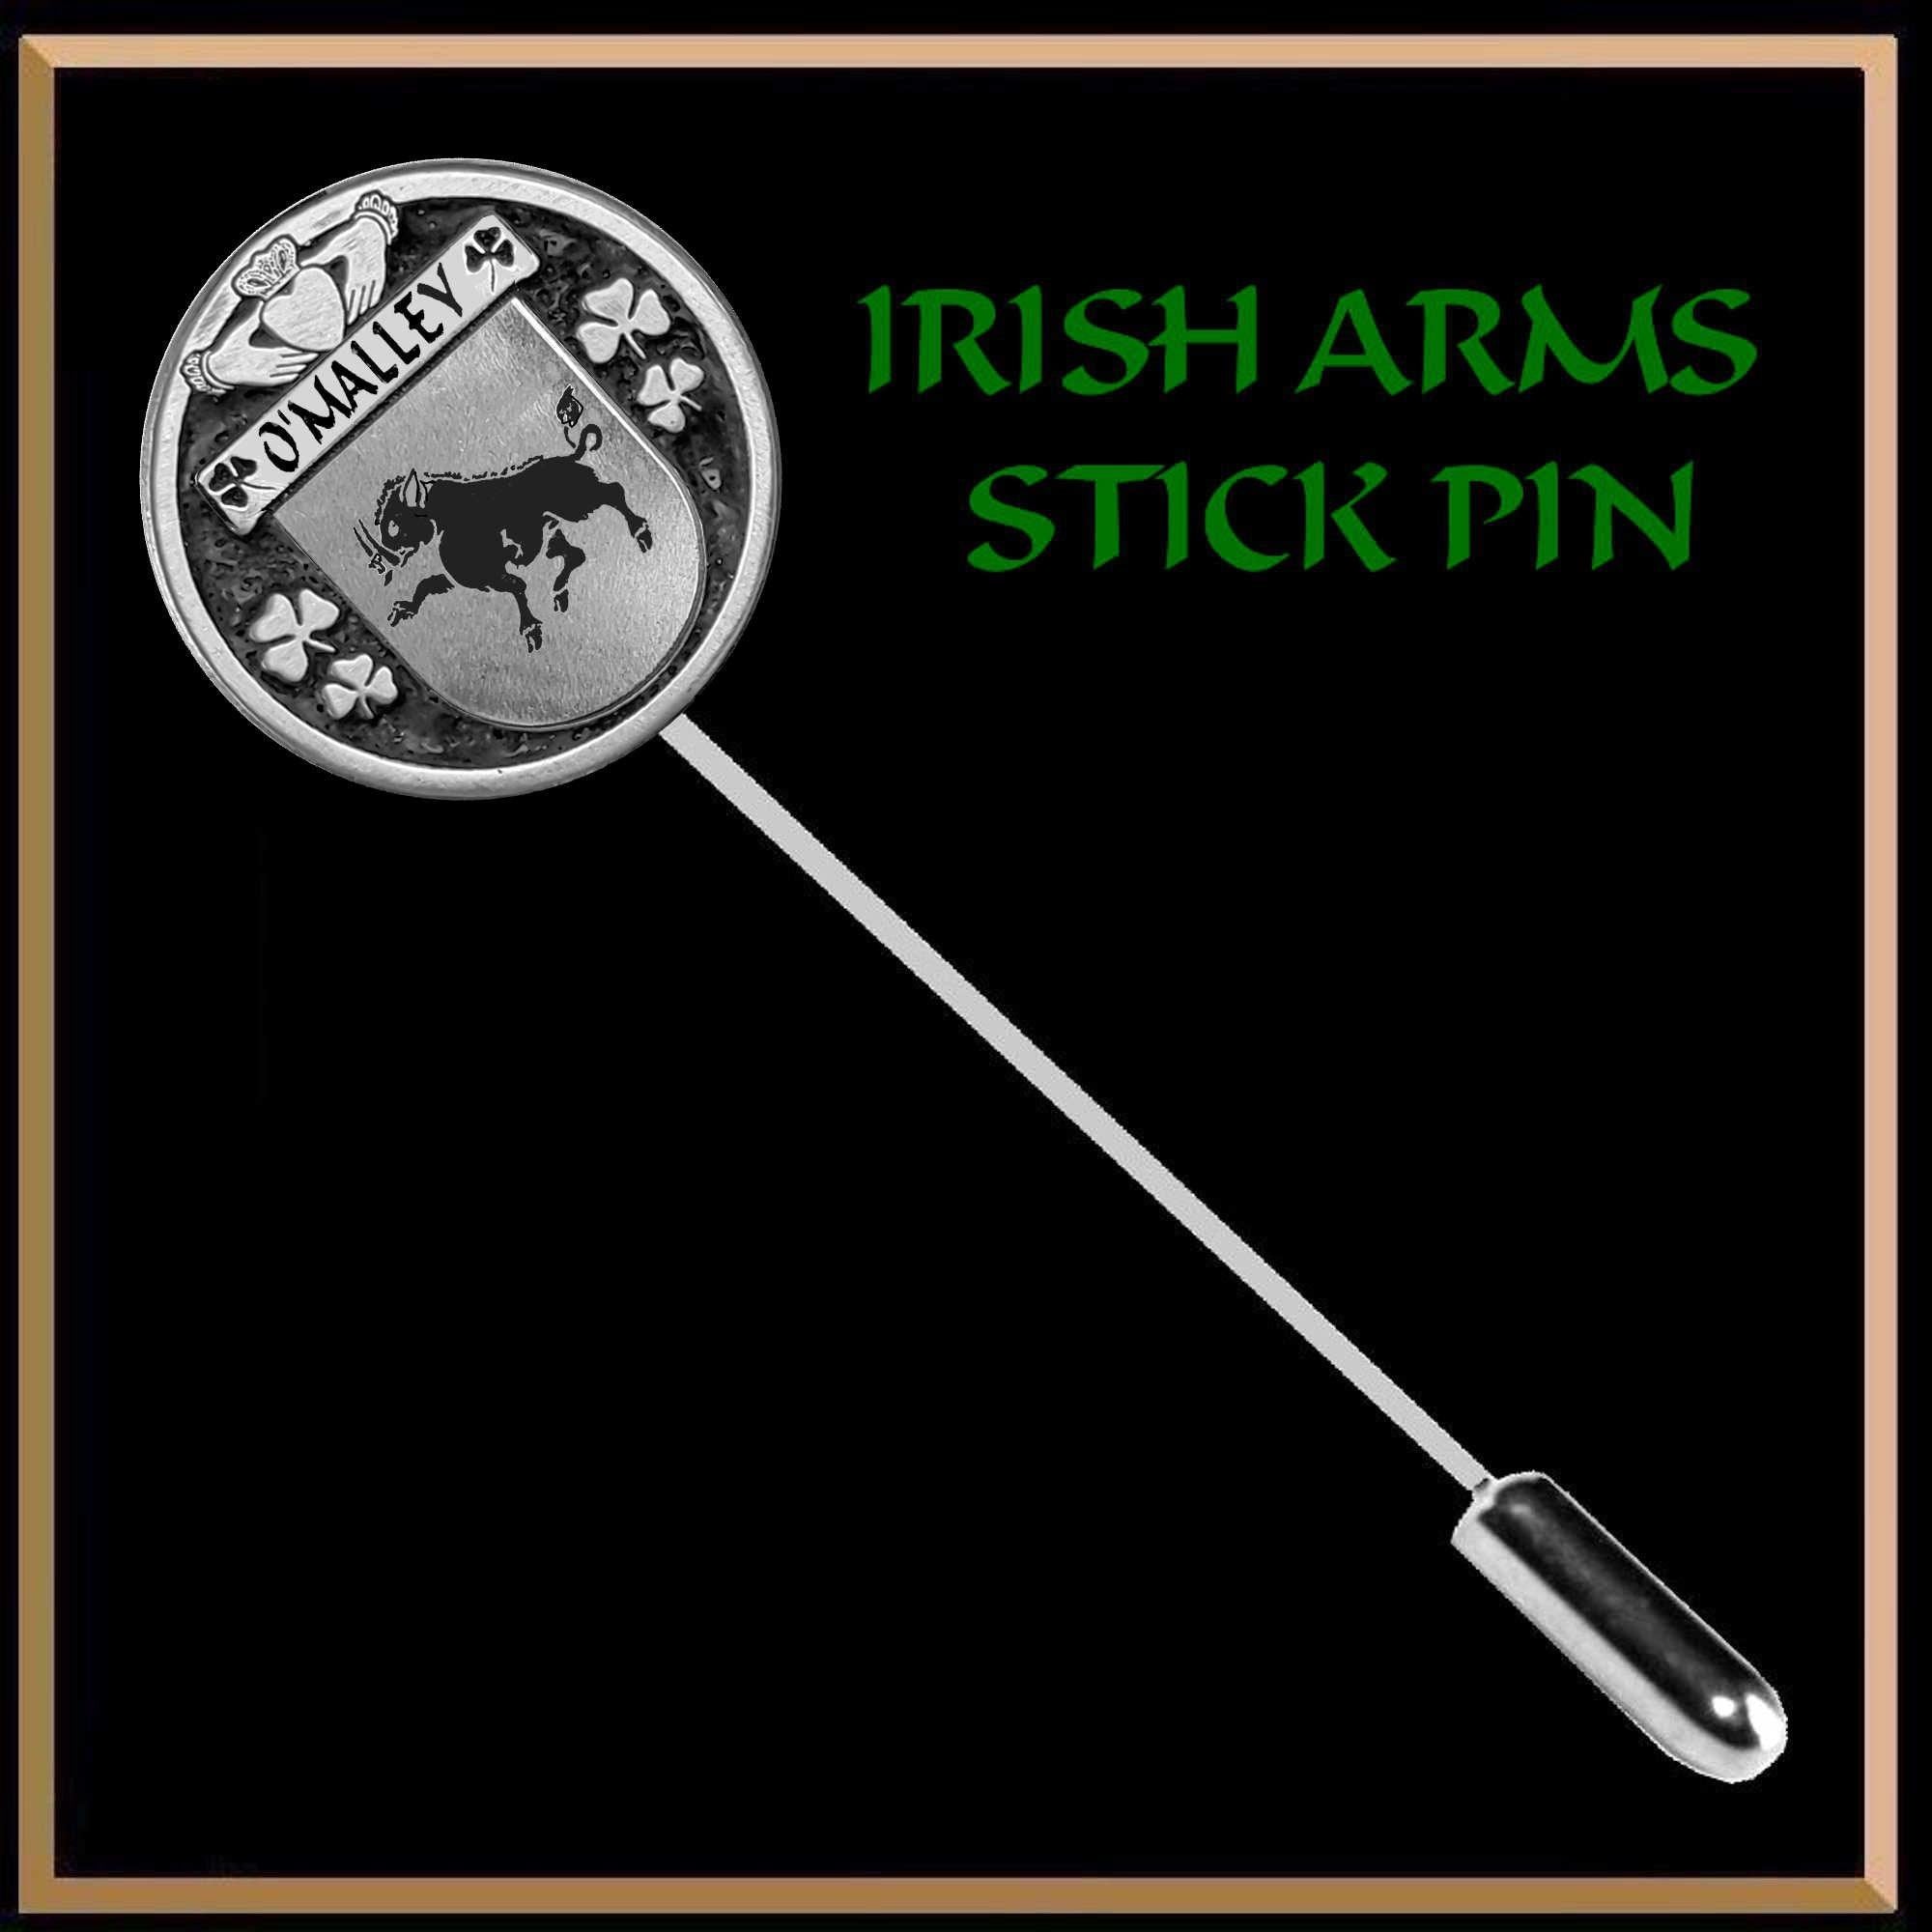 O'Malley Irish Family Coat of Arms Stick Pin